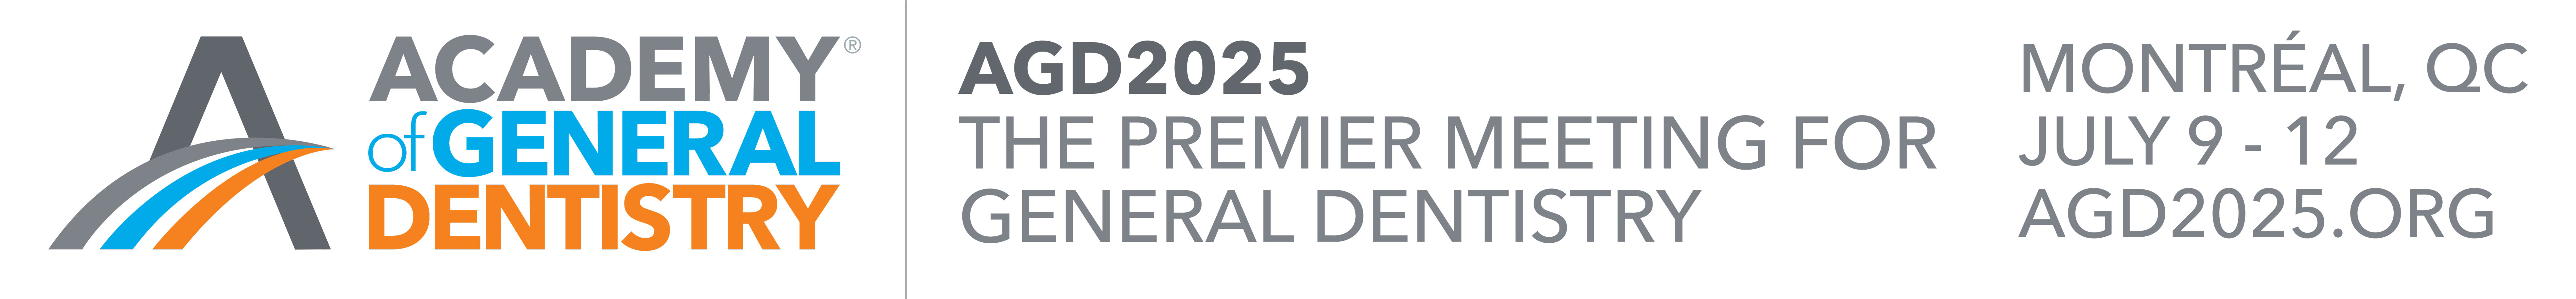 AGD2025_website-logo